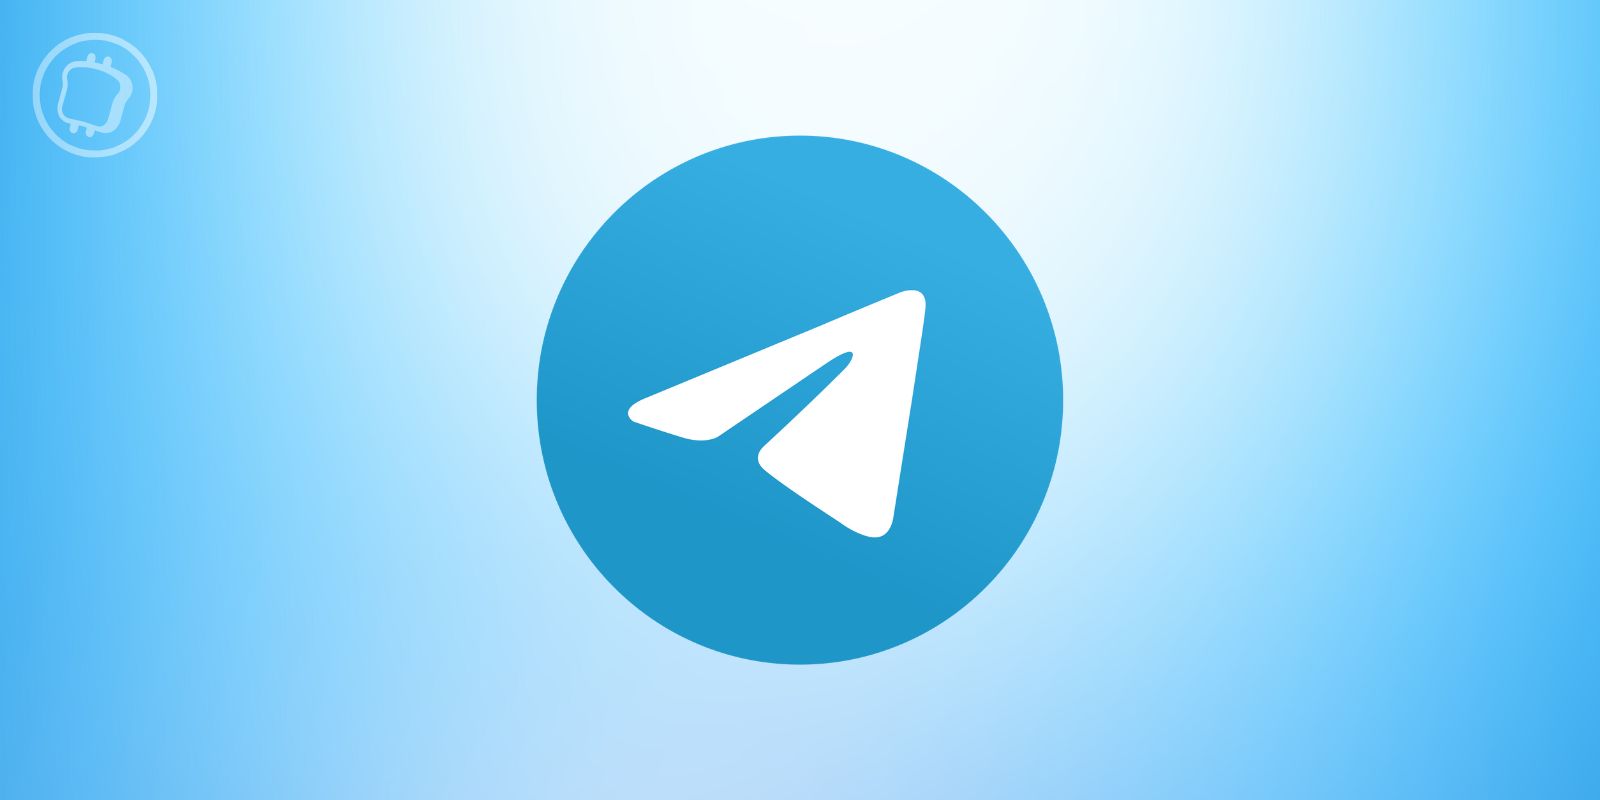 Telegram channels com ru. Эмблема телеграмма. Пиктограмма телеграмм. Логотип для телеграмм канала. Значки мессенджеров телеграм.